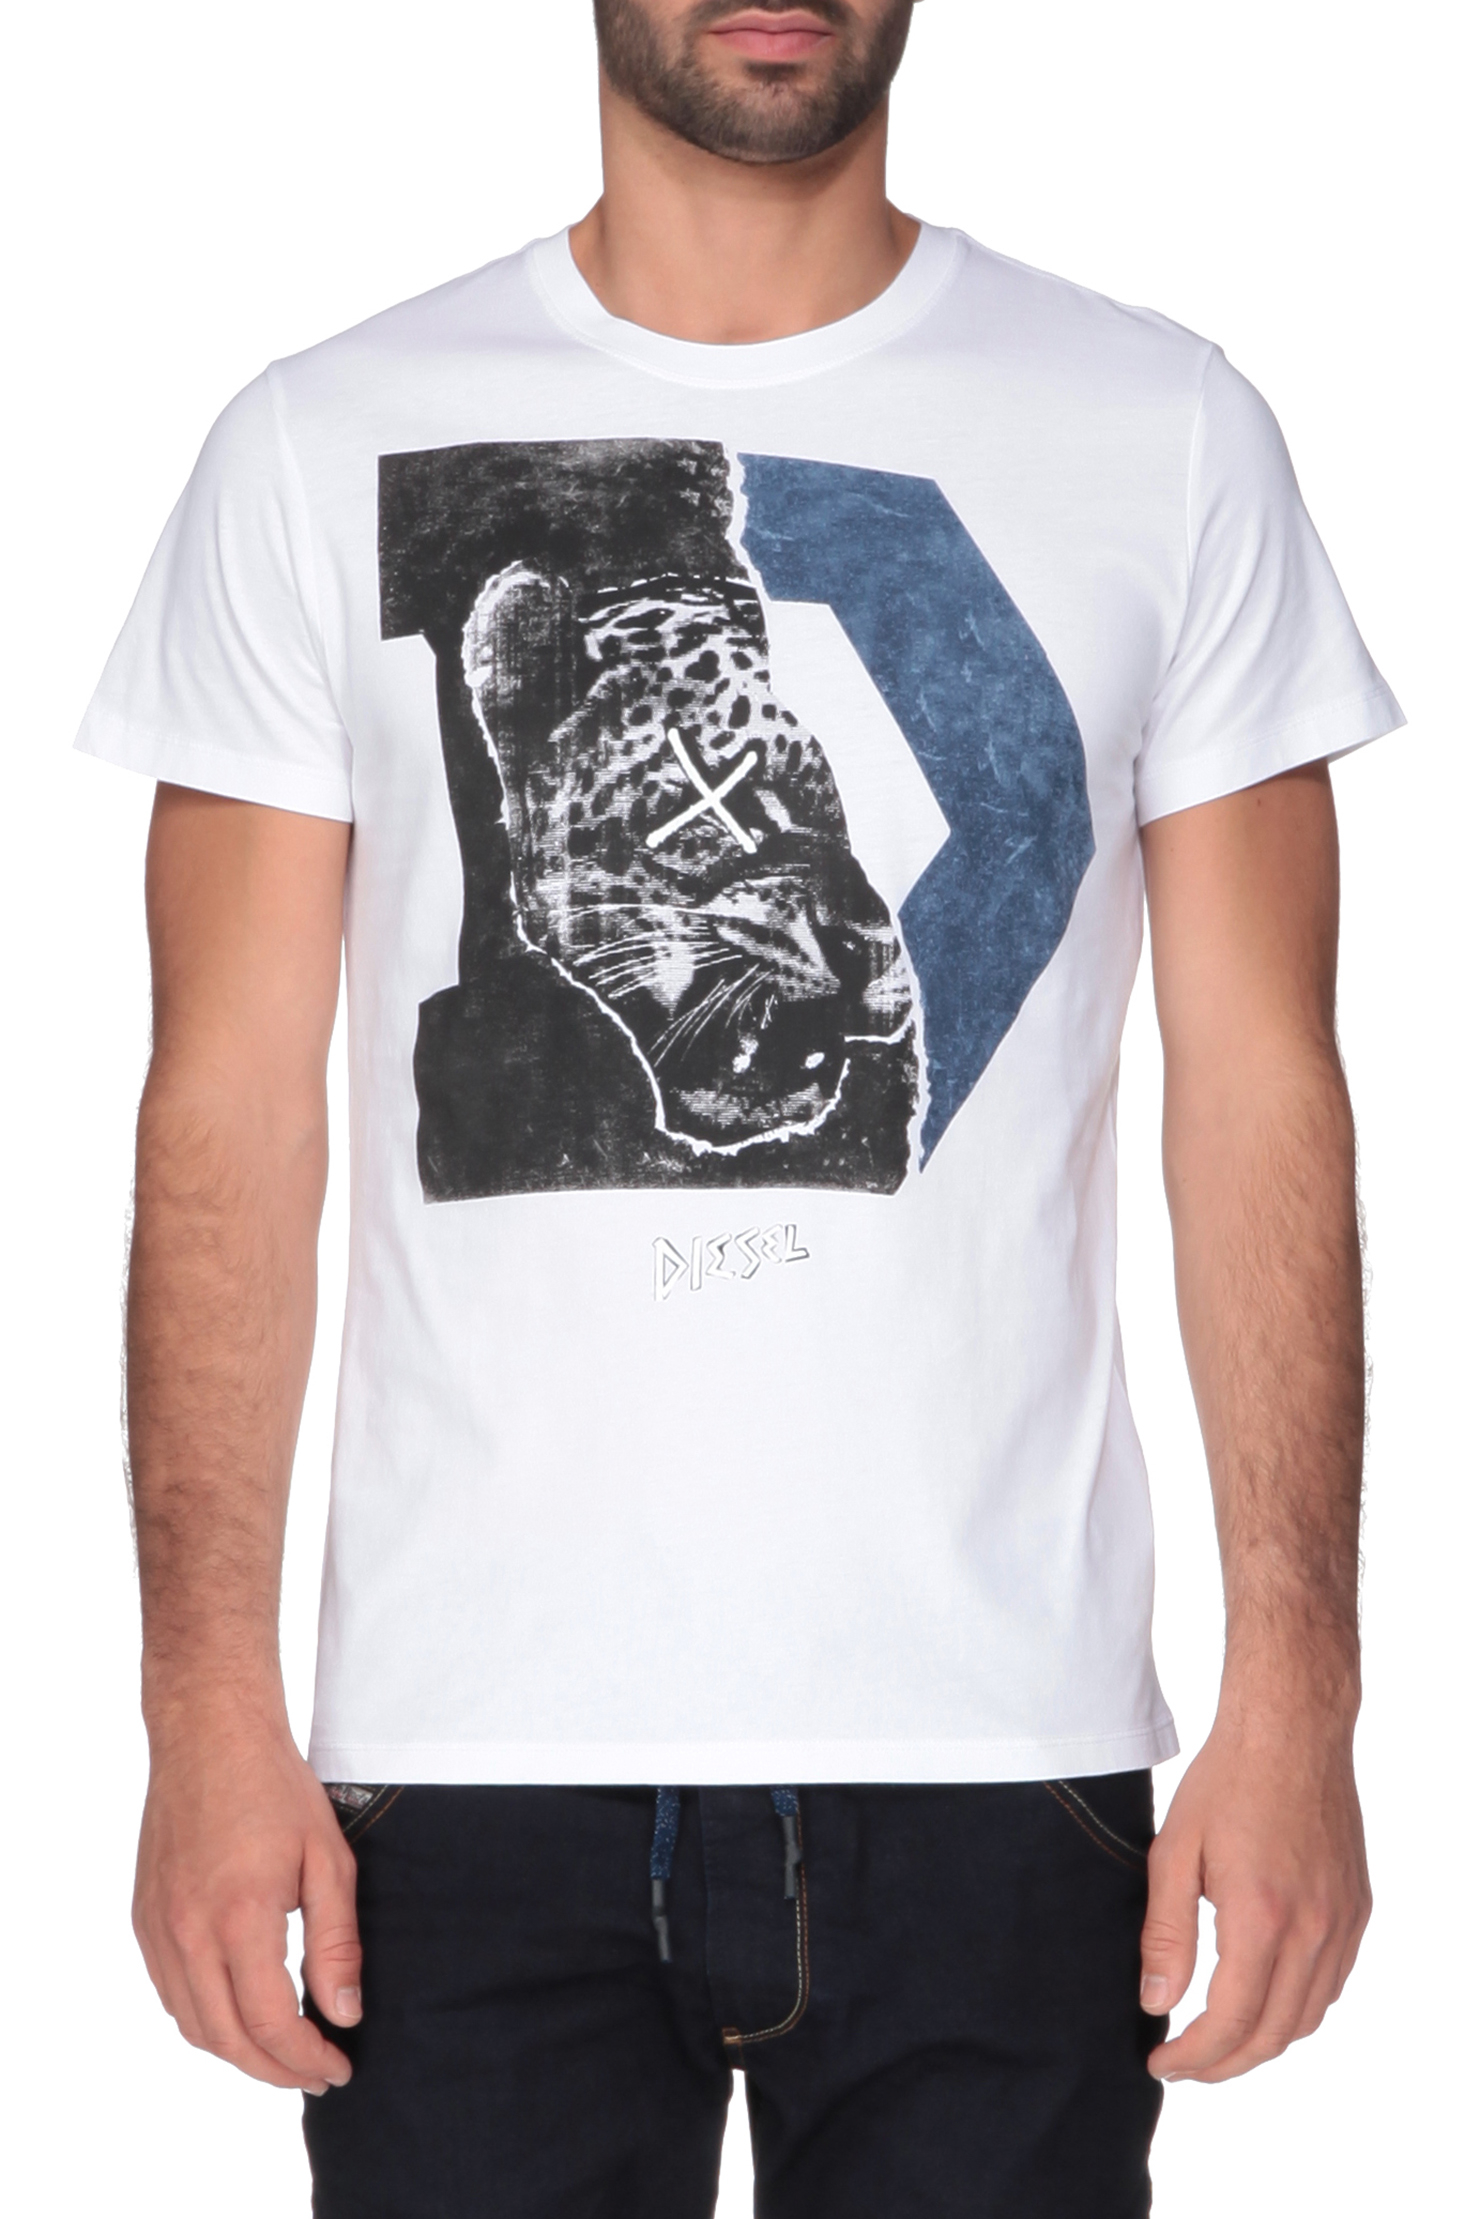 Diesel Mohawk Print T-shirt in White for Men - Save 52% | Lyst